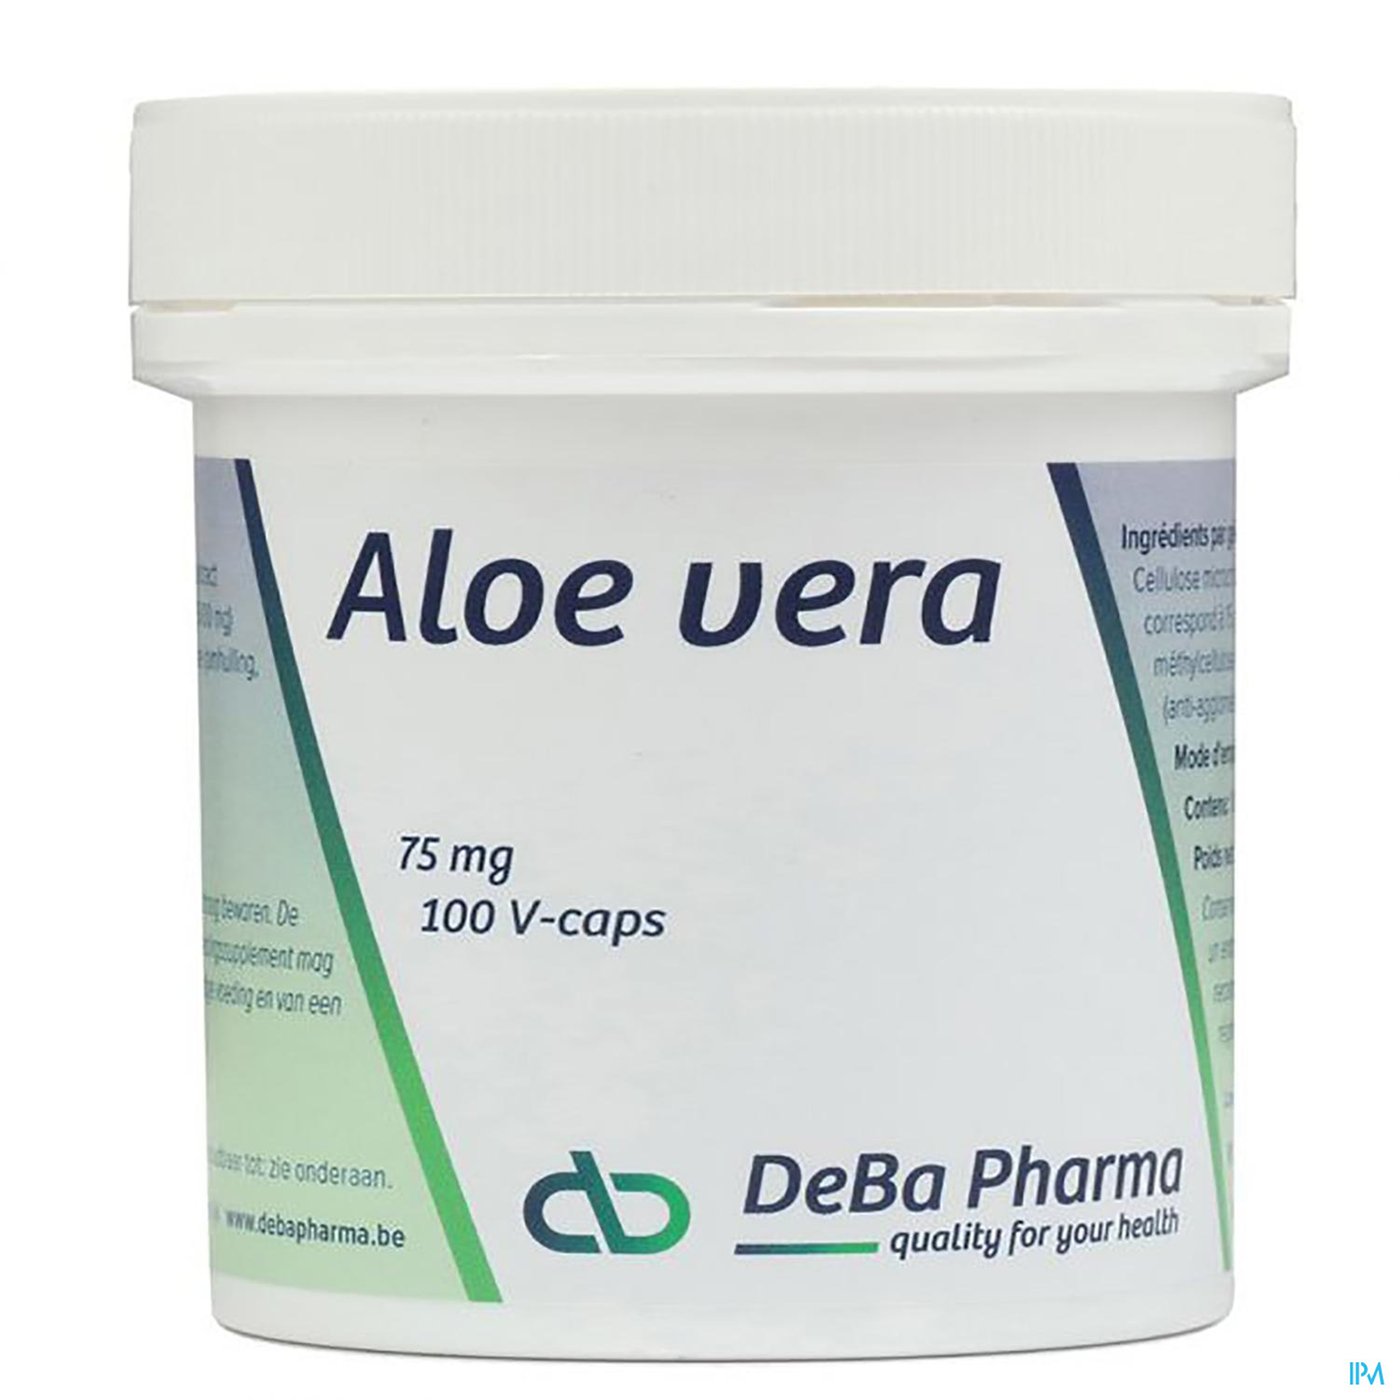 Aloe Vera 200:1 V-caps 100x75mg Deba packshot